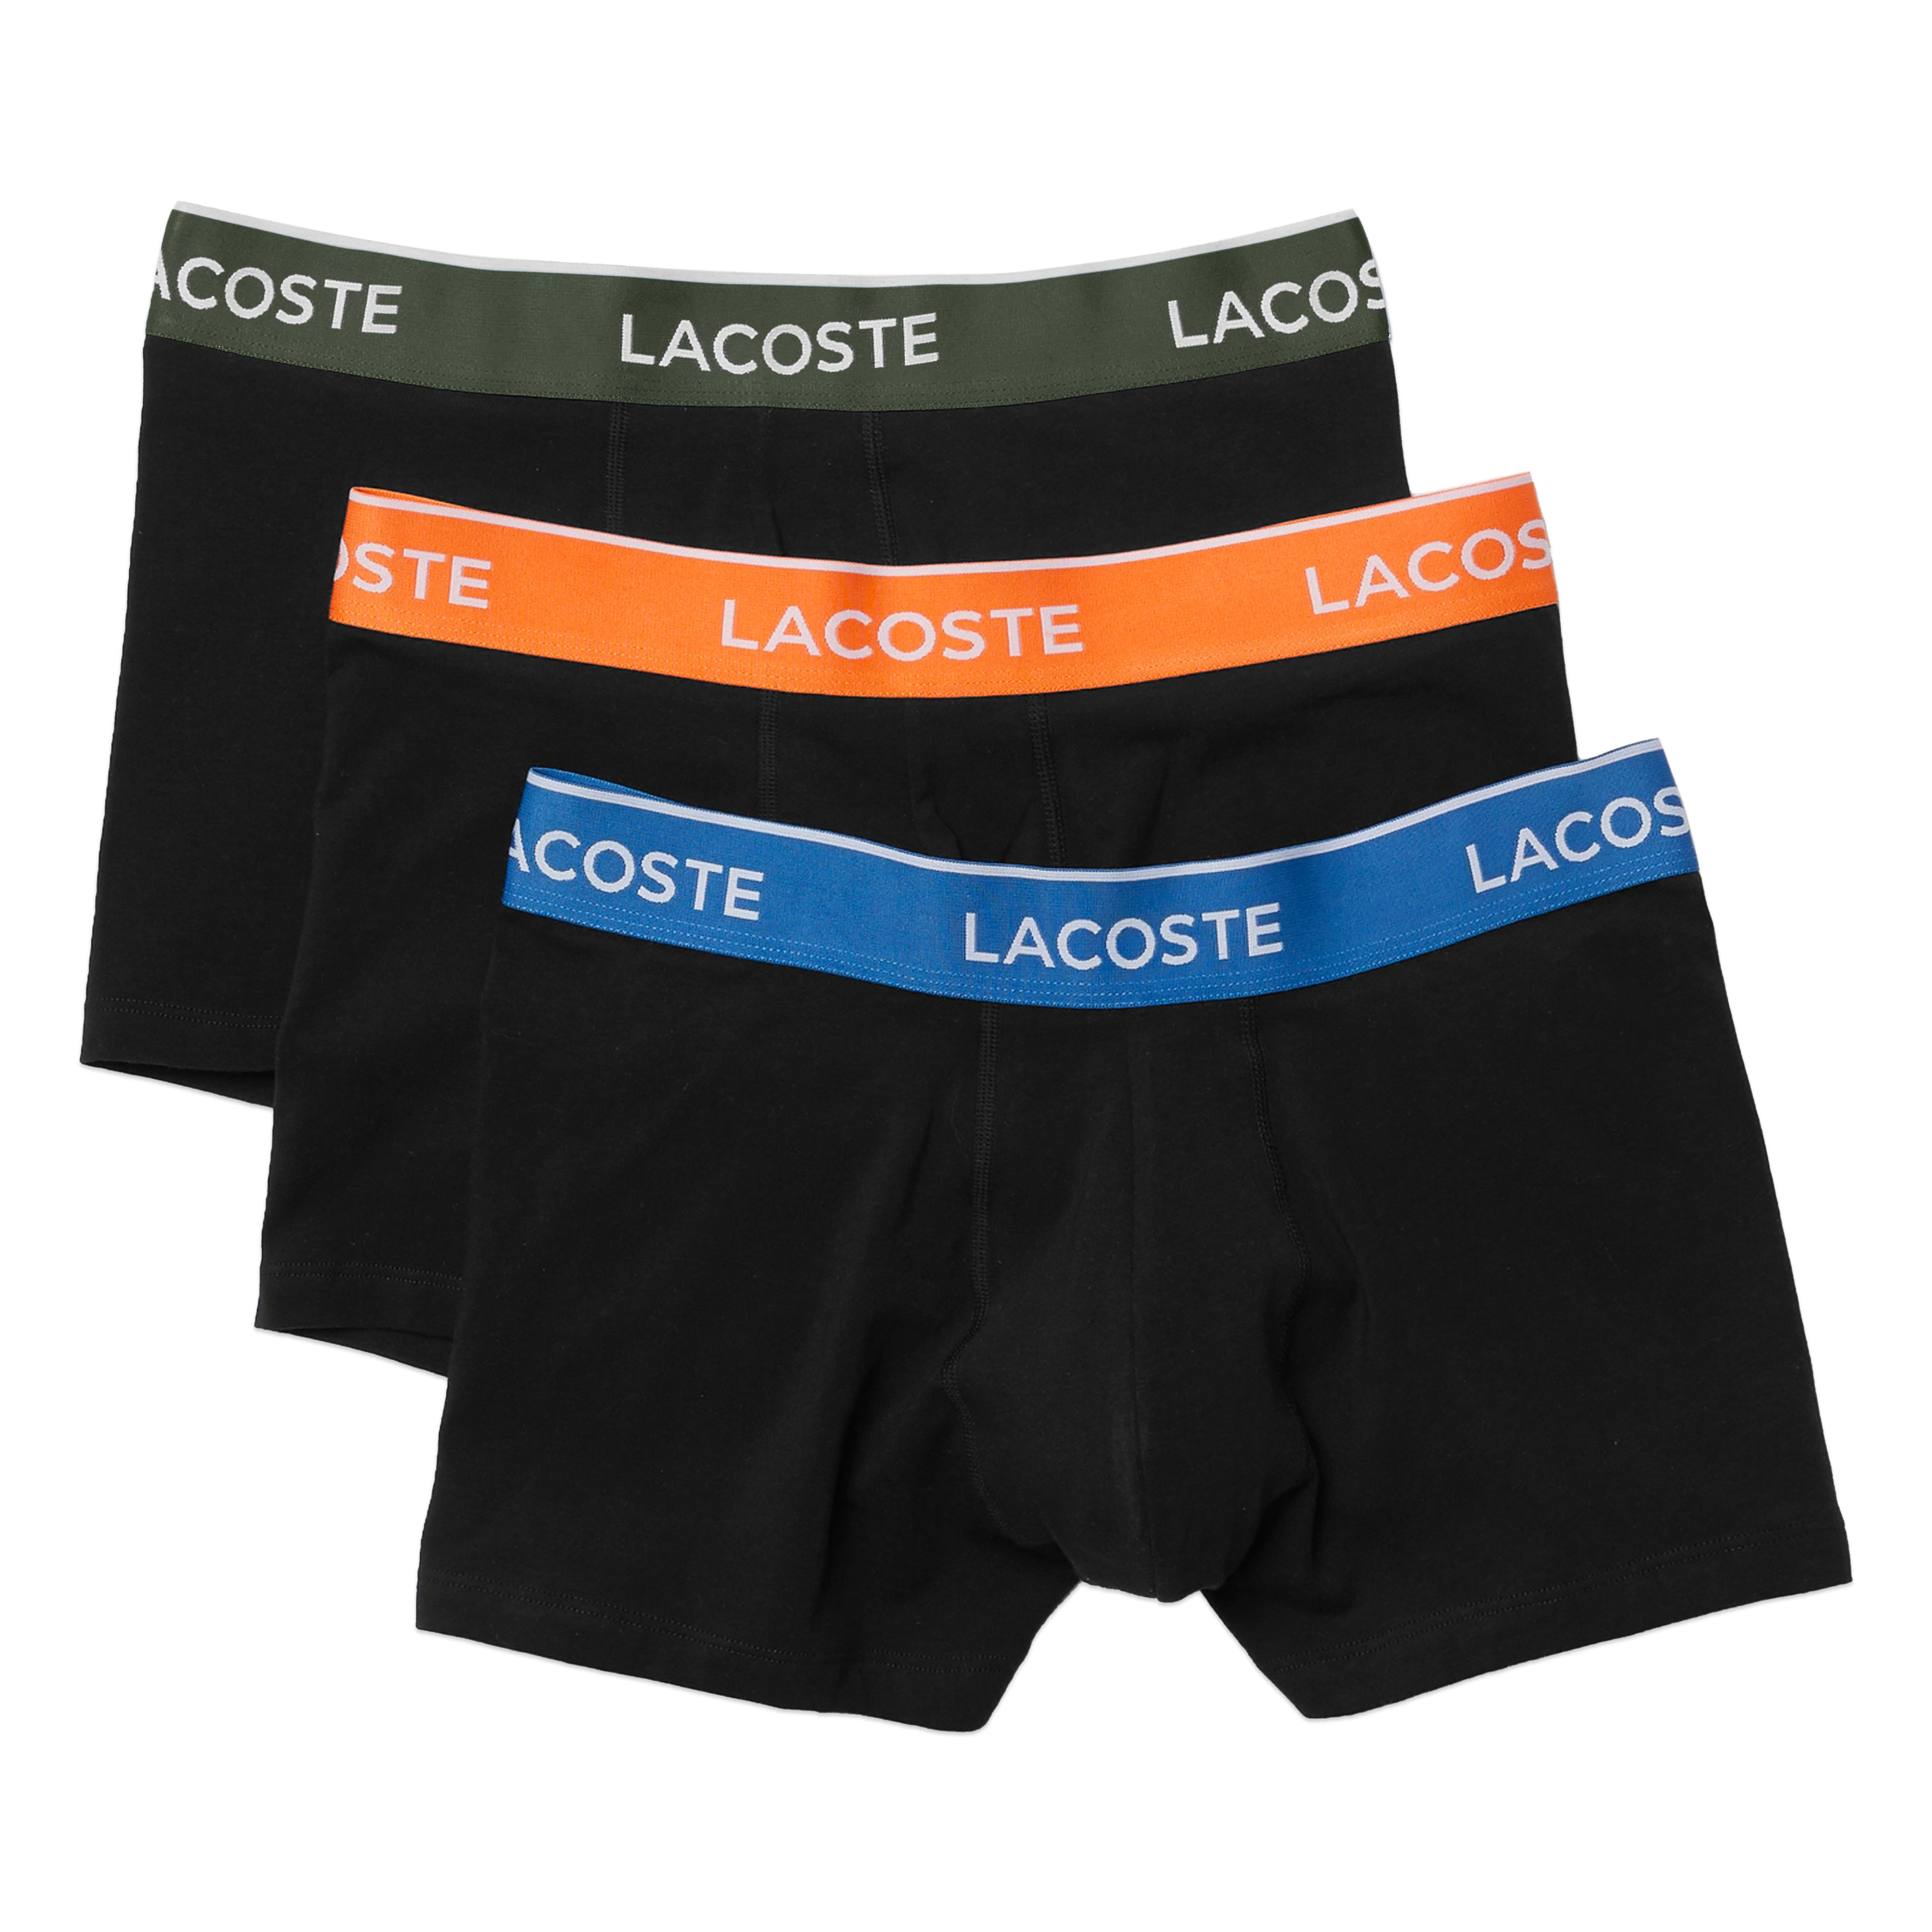 Lacoste 3 Pack Cotton Stretch Trunks 5H3401 - Black with Blue/Orange/Khaki